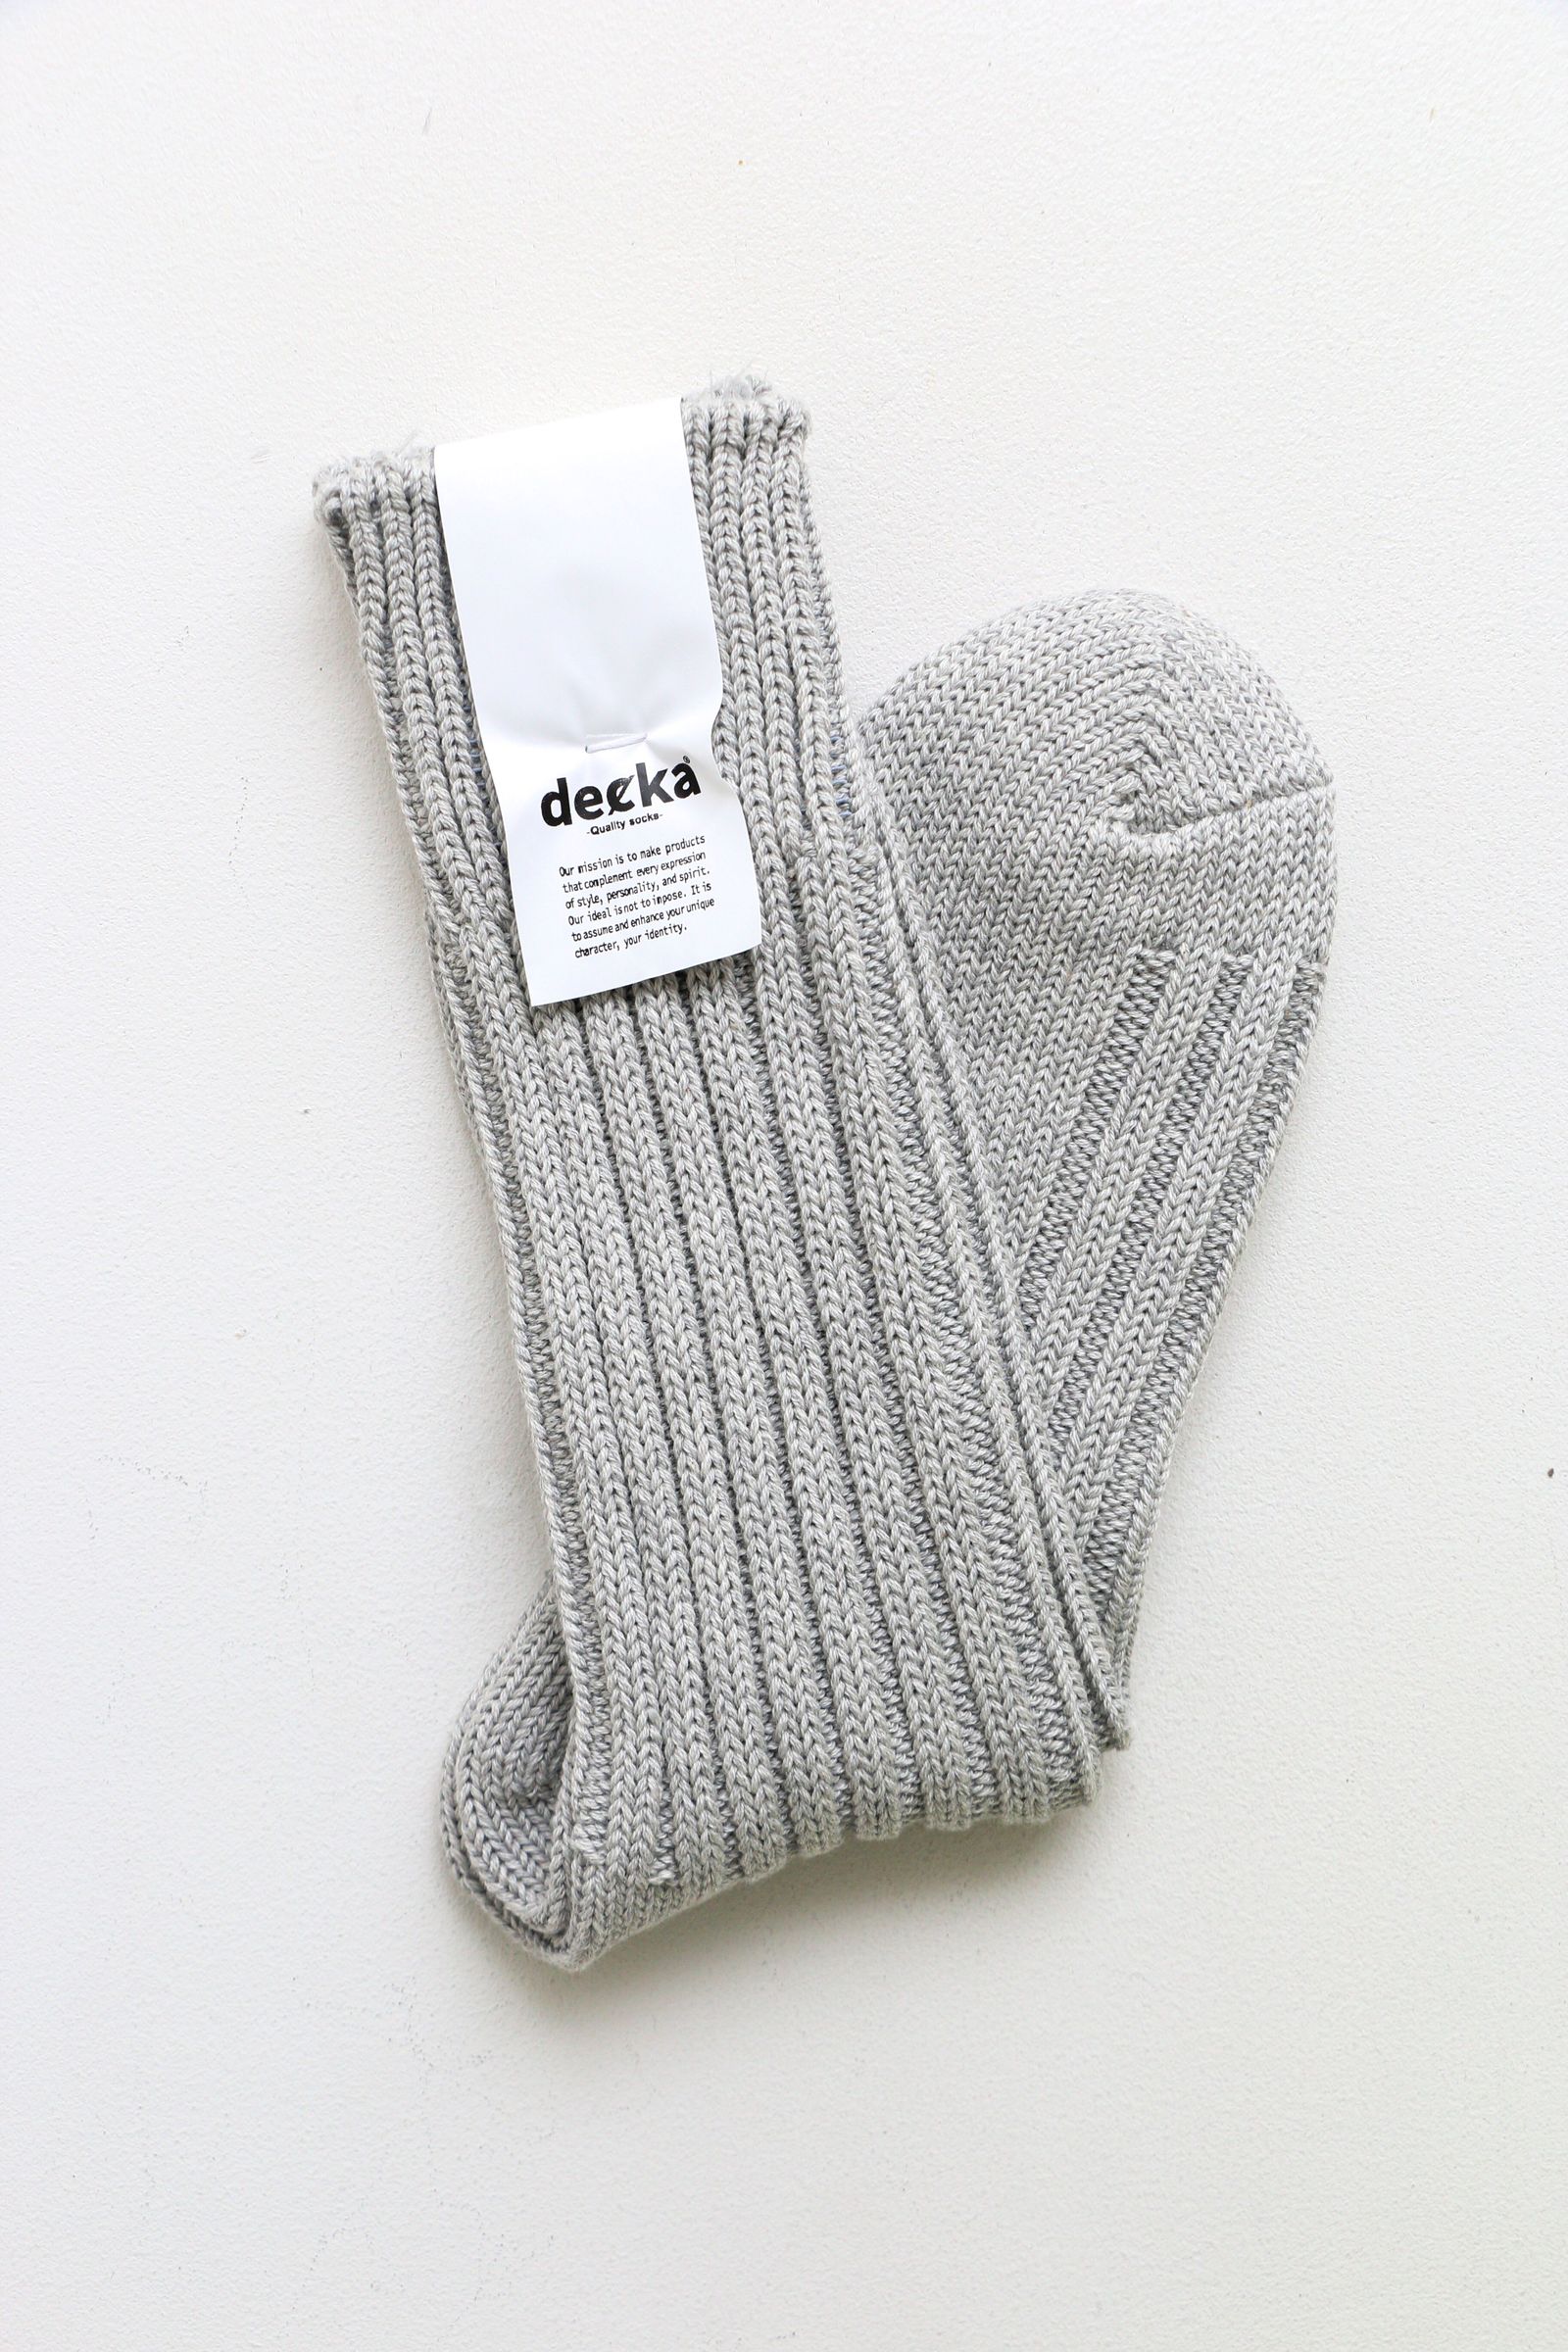 decka quality socks - Cased Heavyweight Plain Socks / Feather Gray